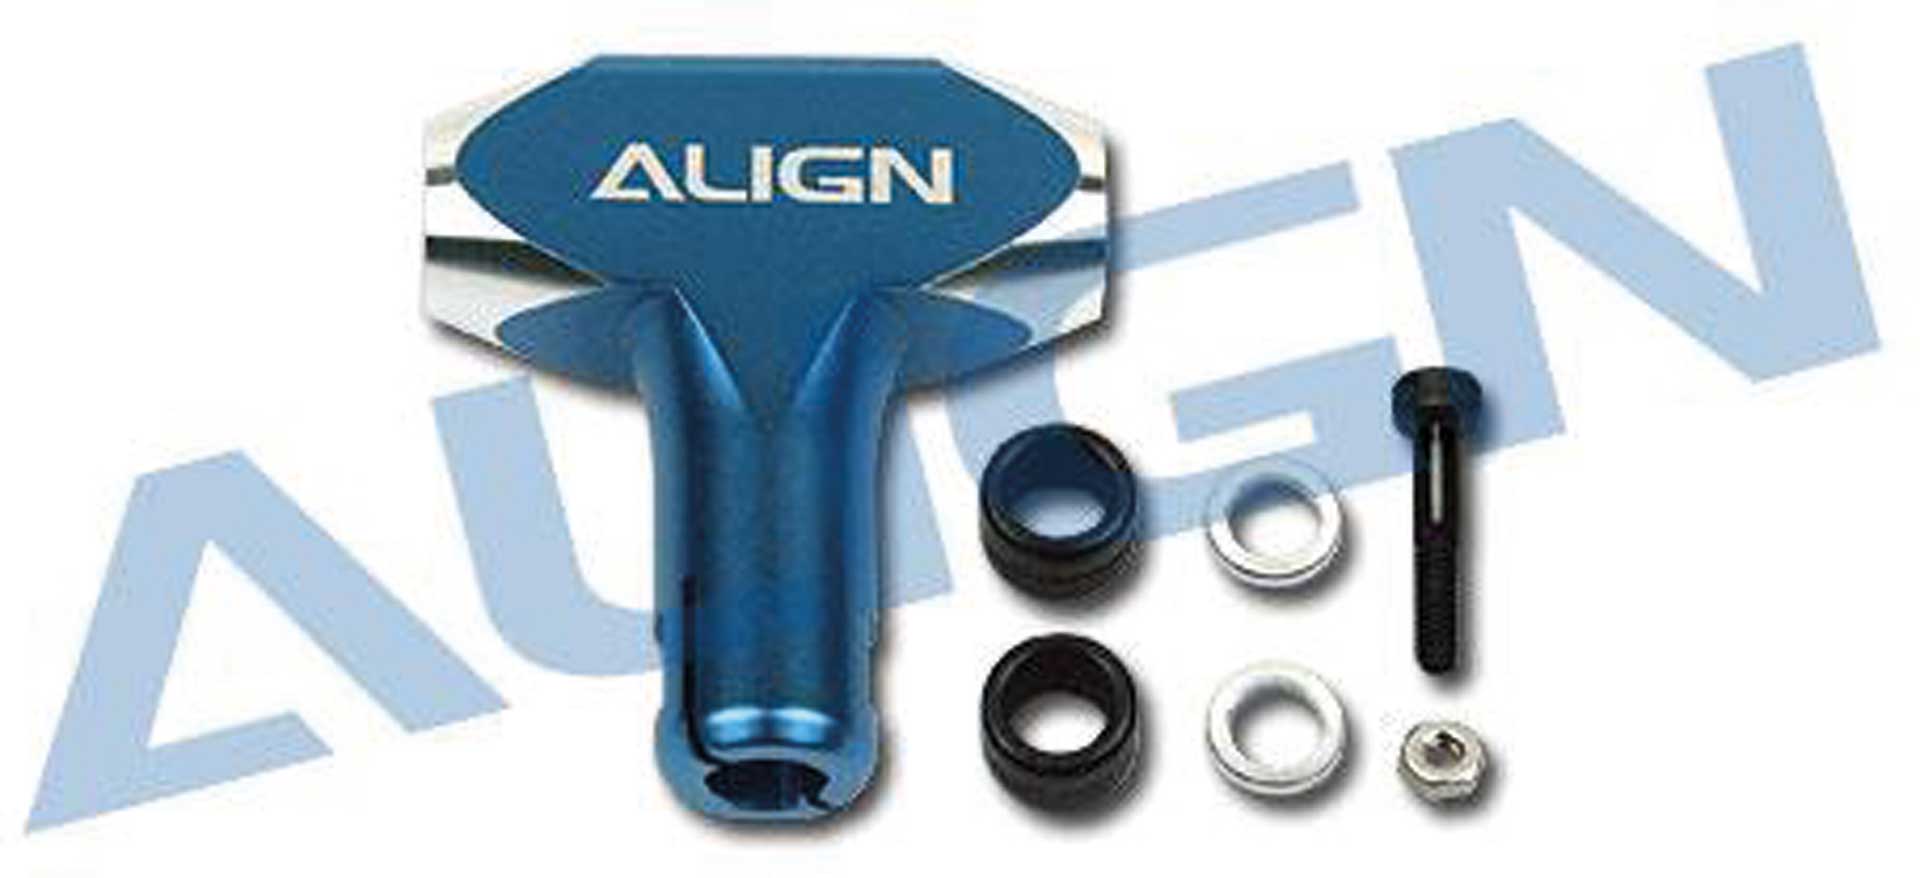 ALIGN 450FL Main rotor center piece / Blue